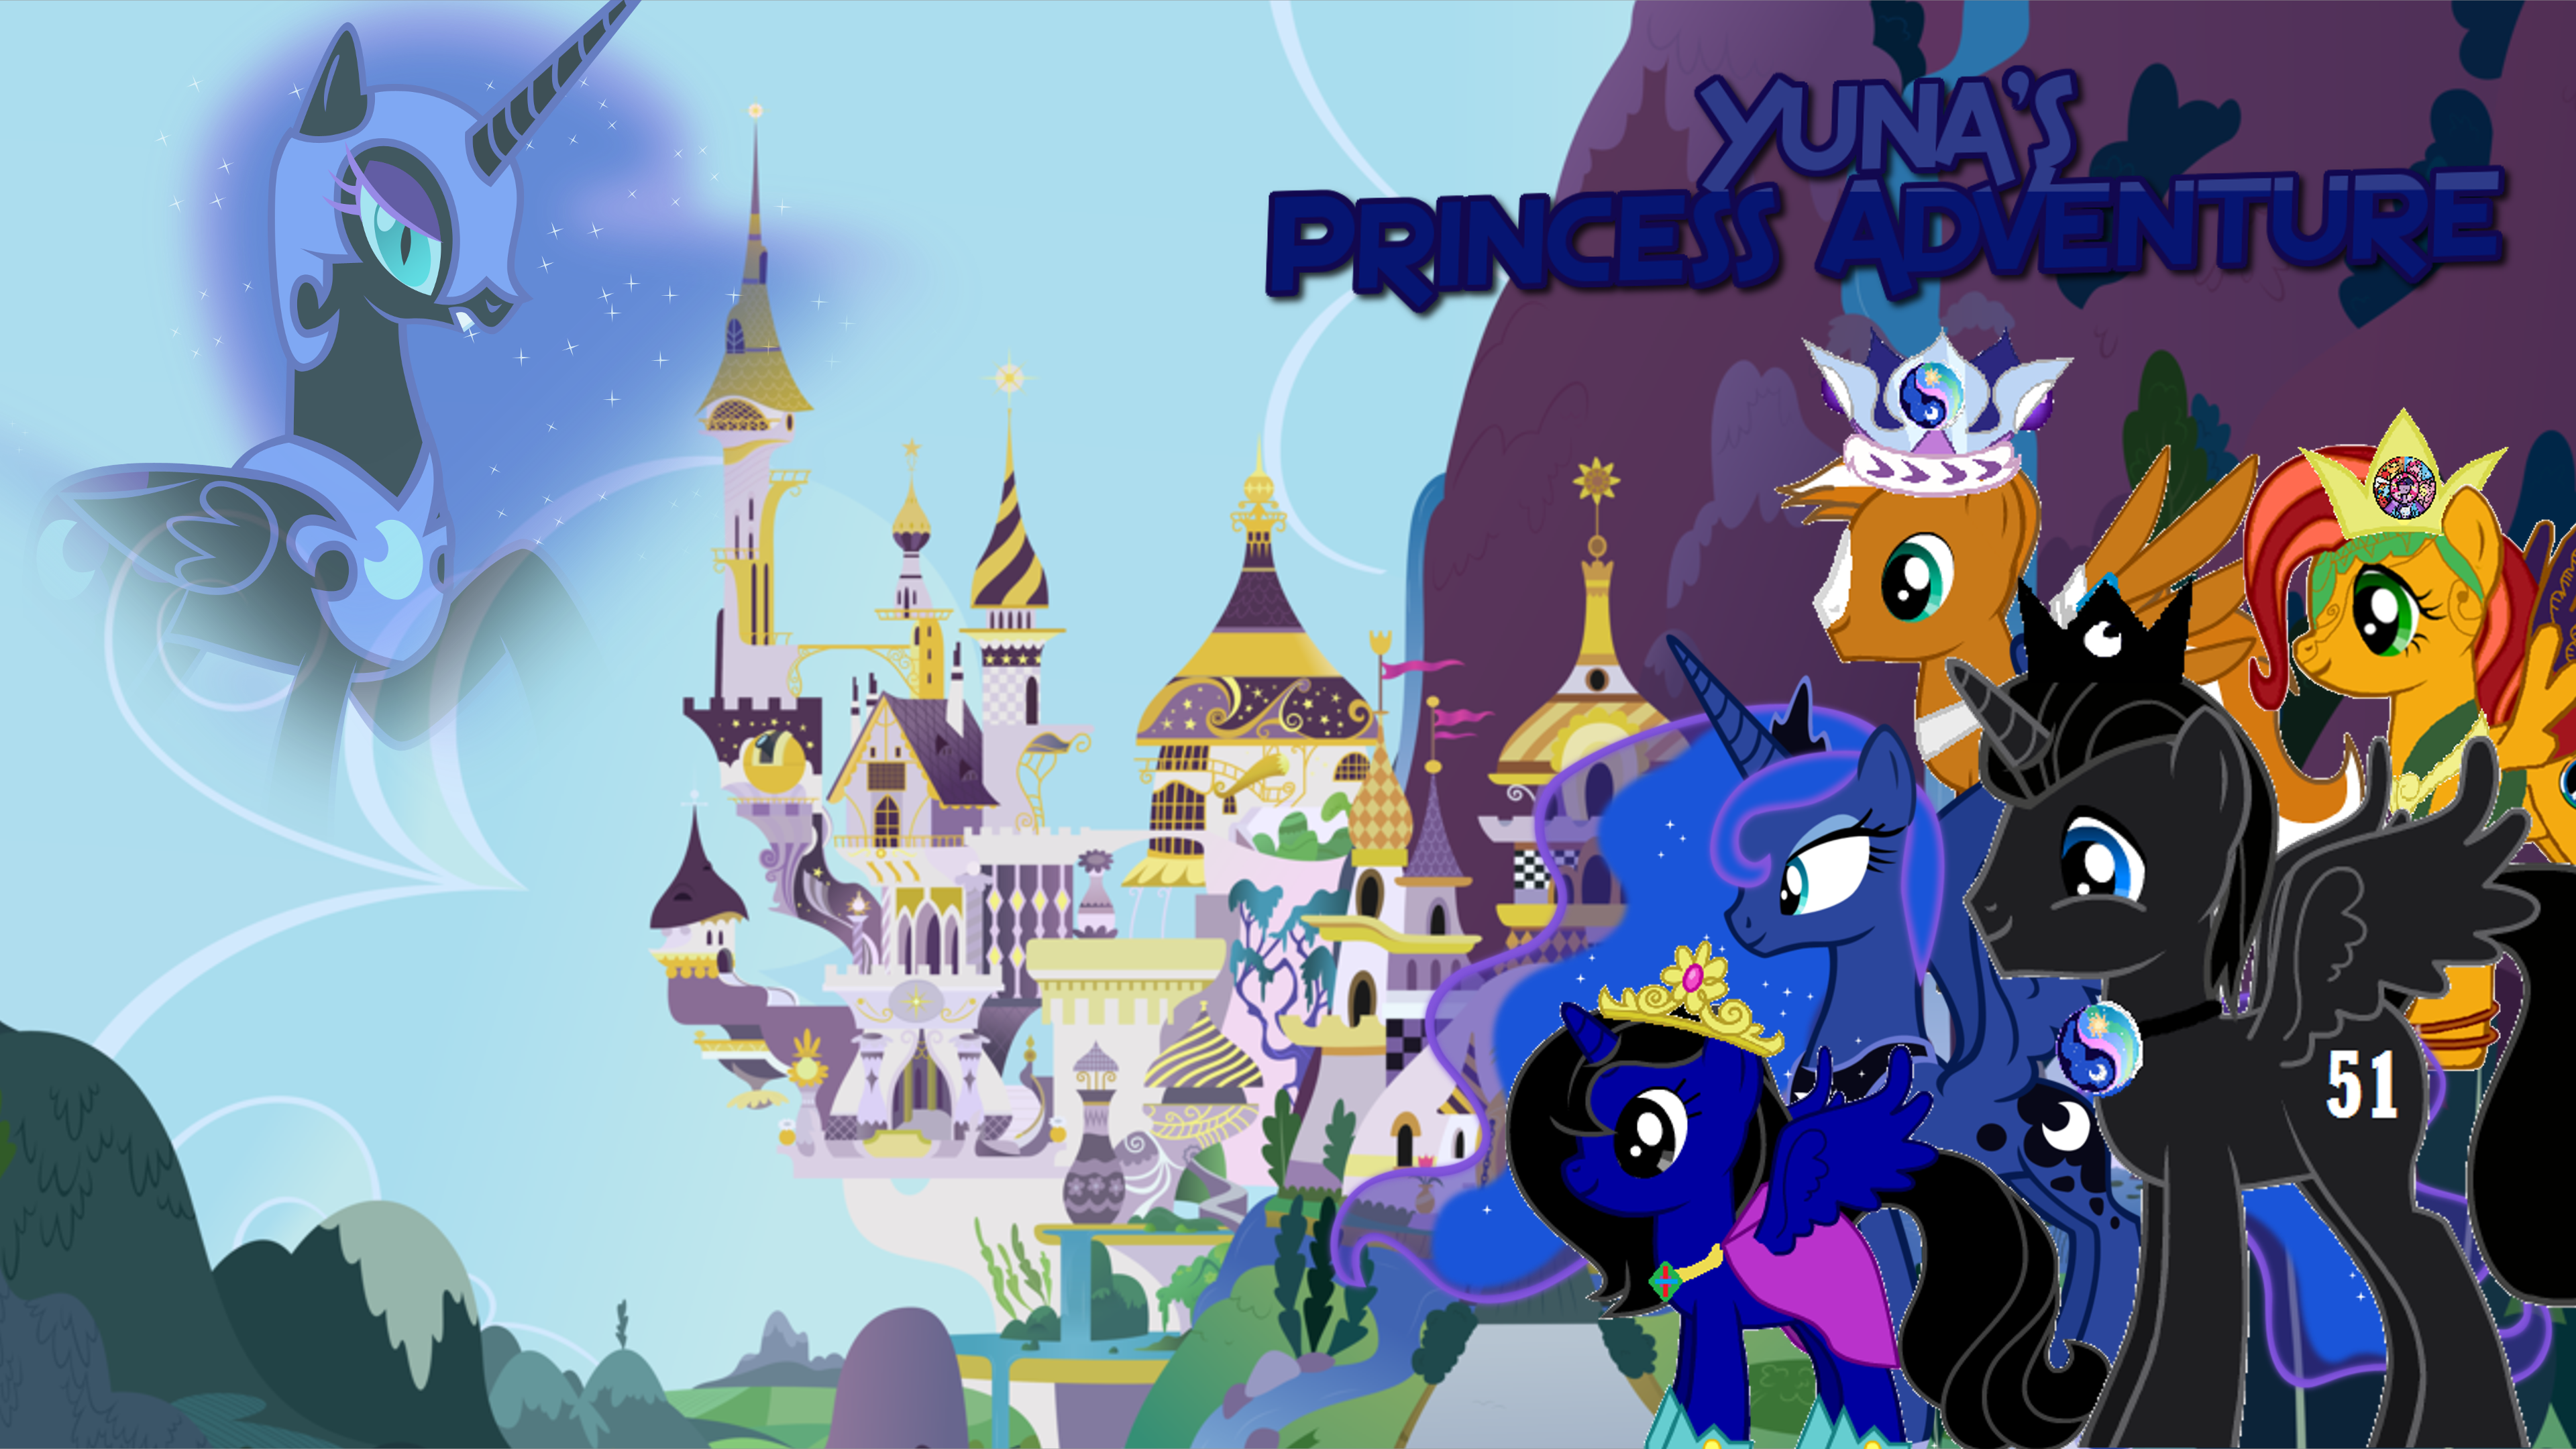 Megatron, Yuna's Princess adventure Wikia